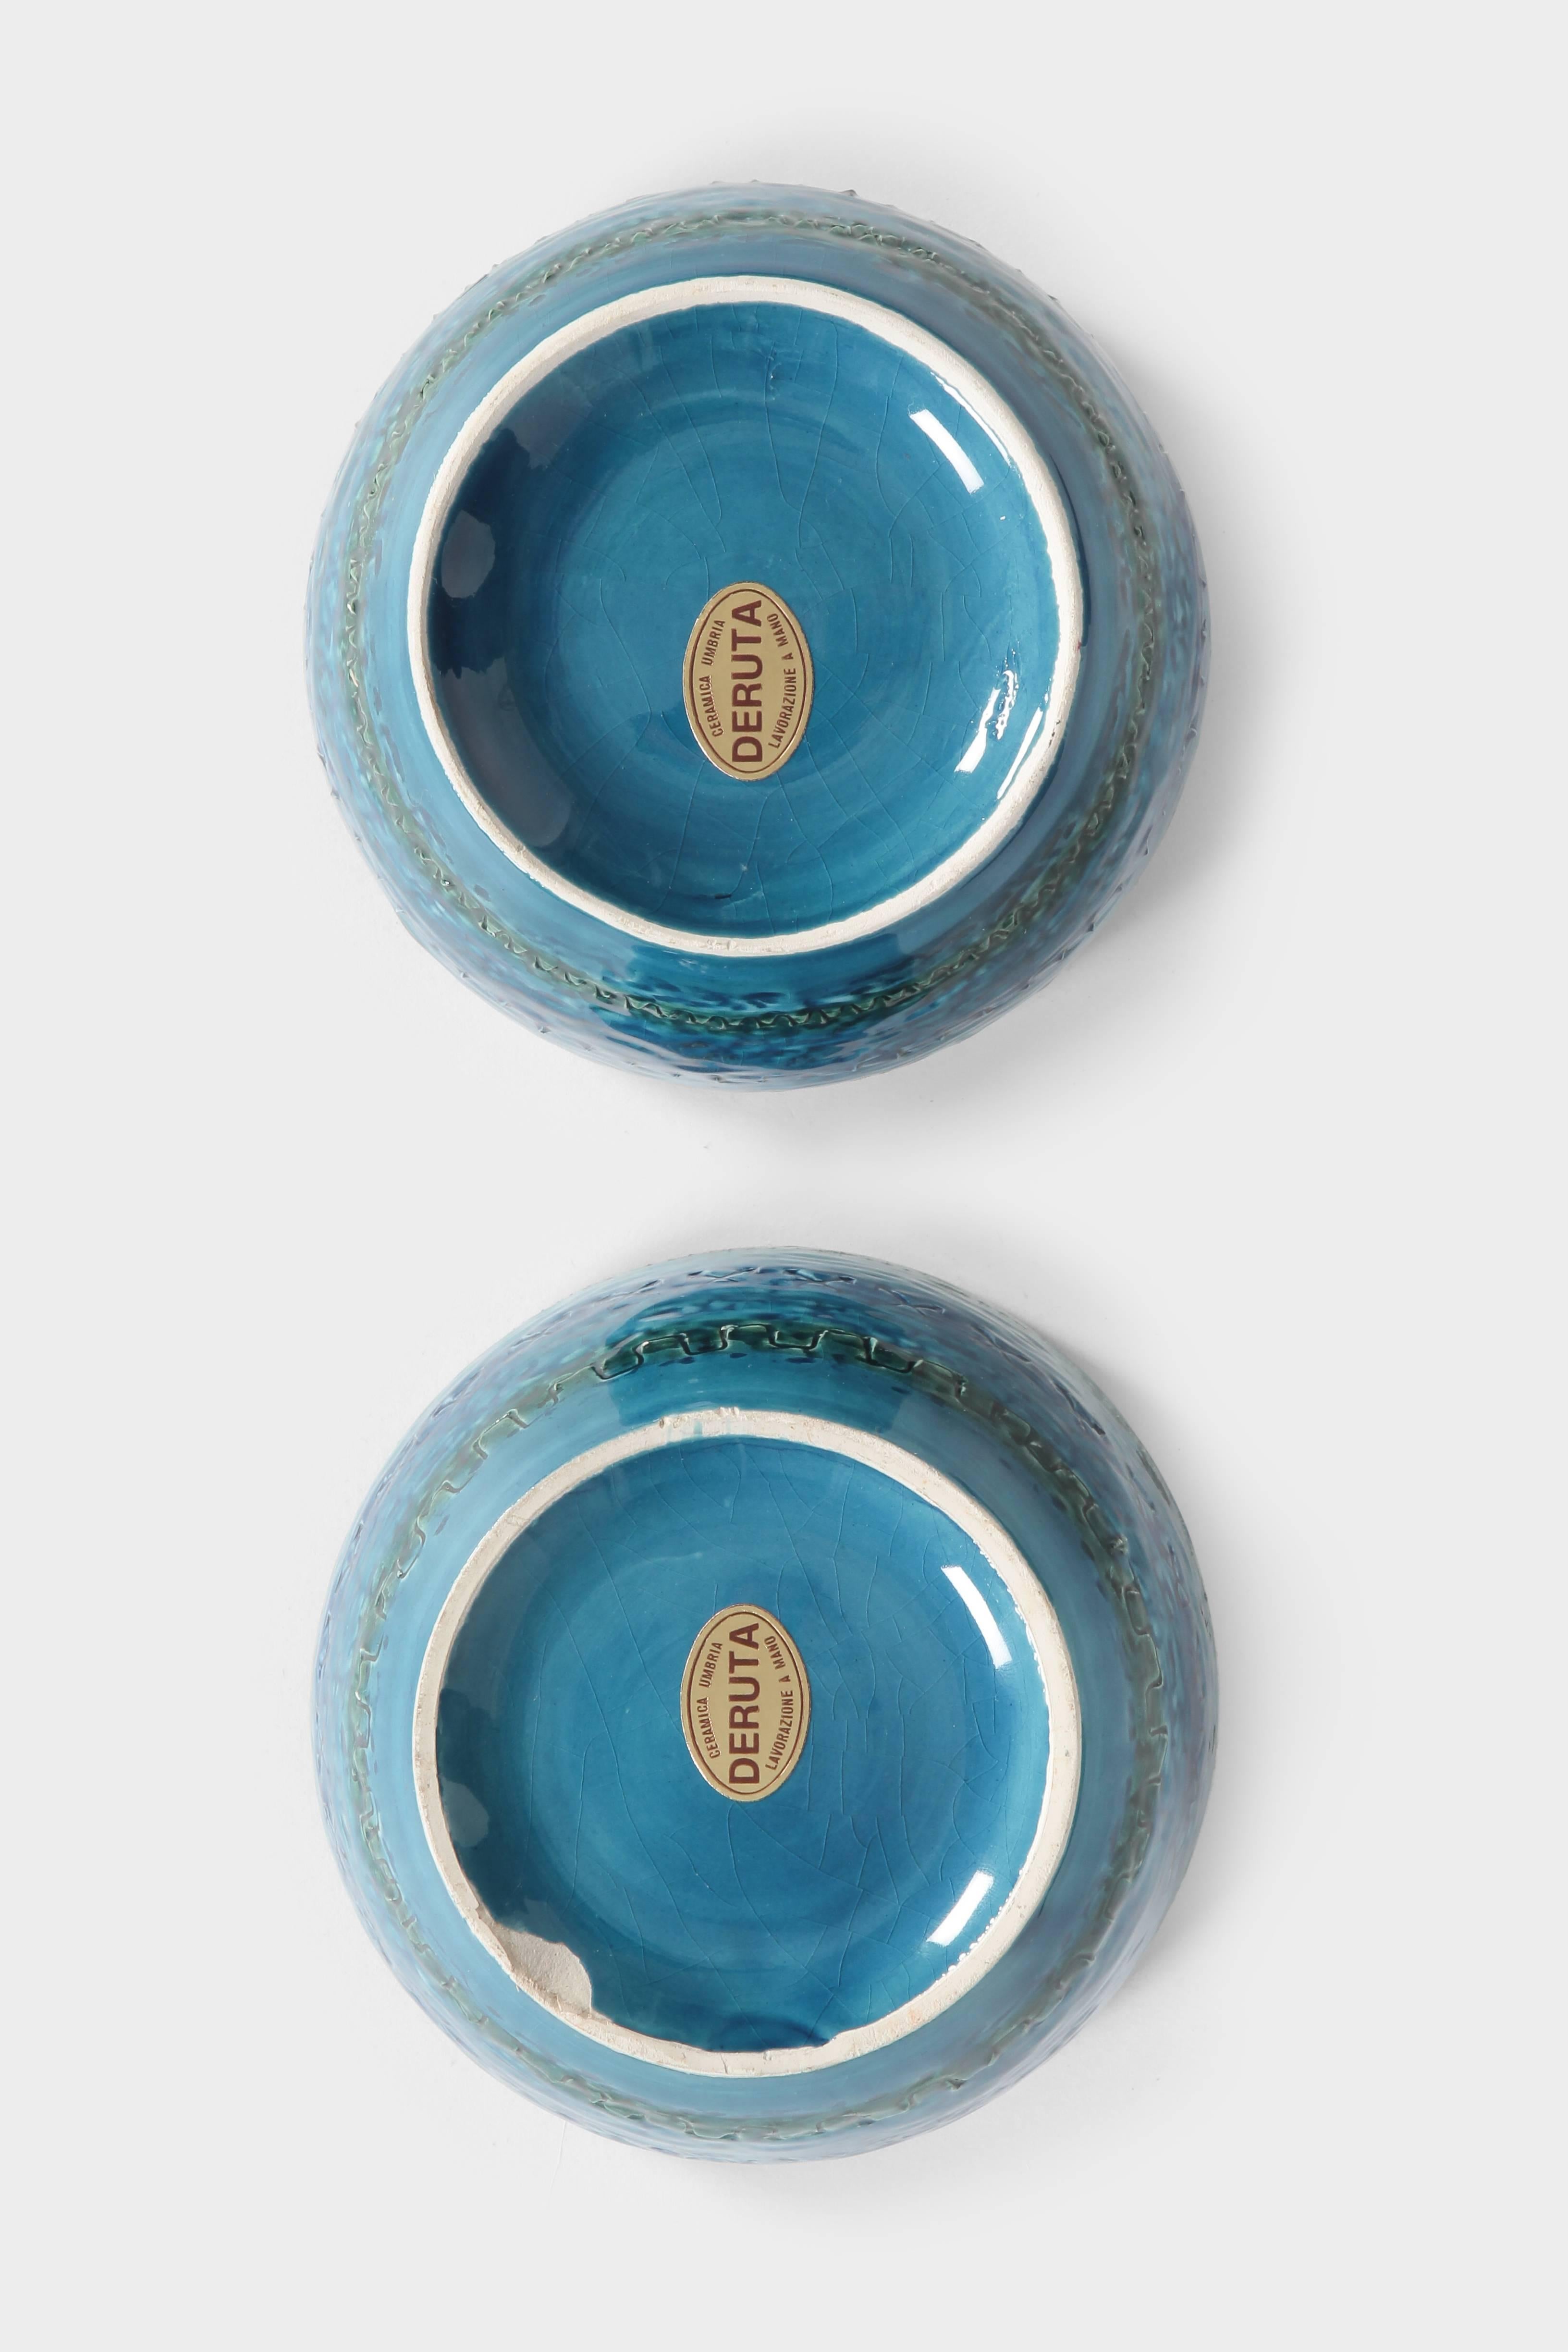 Mid-Century Modern Aldo Londi “Rimini Blu” Bowls Bitossi, 1960s